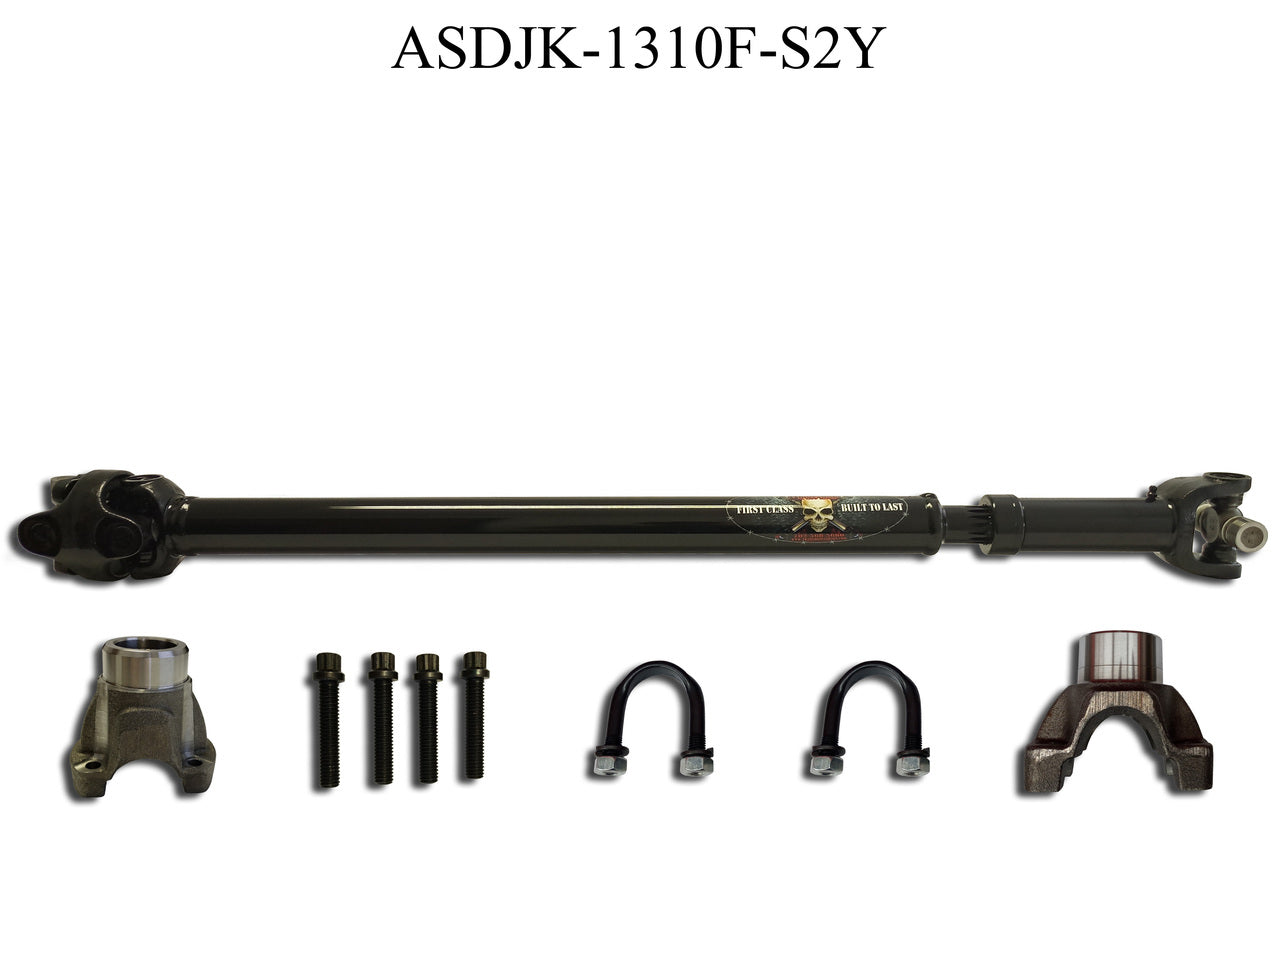 Adams Driveshaft Front JK 1310 CV Driveshaft Solid U-joints  with Pinion Yoke [EXTREME DUTY SERIES]